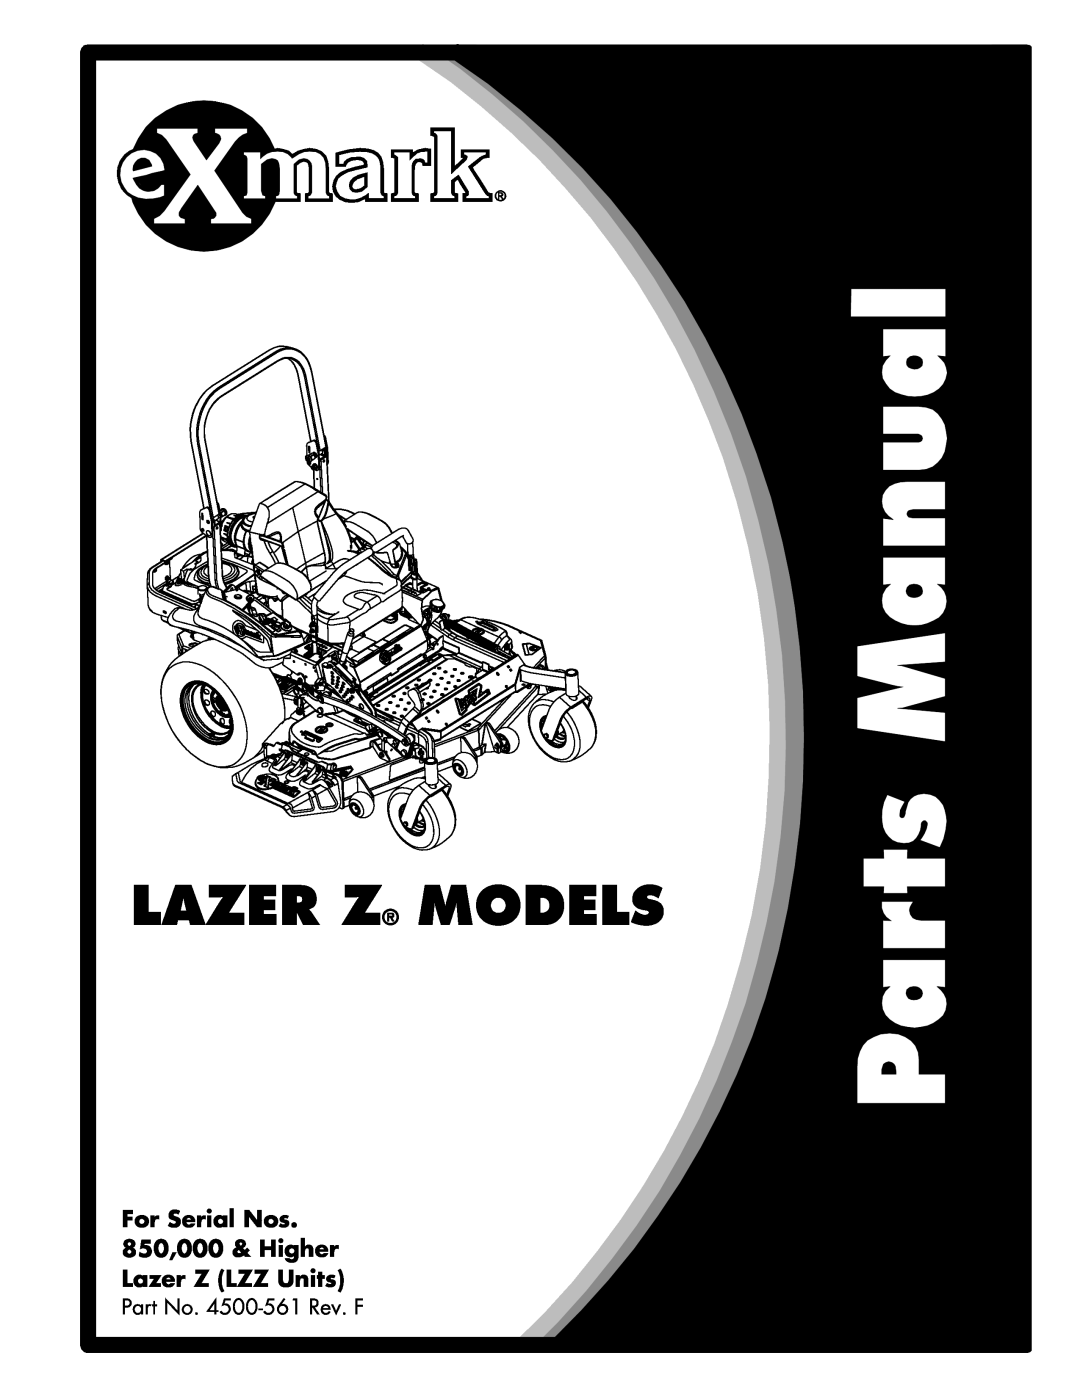 Exmark manual Lazer Z Models, For Serial Nos 850,000 & Higher Lazer Z LZZ Units, Part No. 4500-561Rev. F 